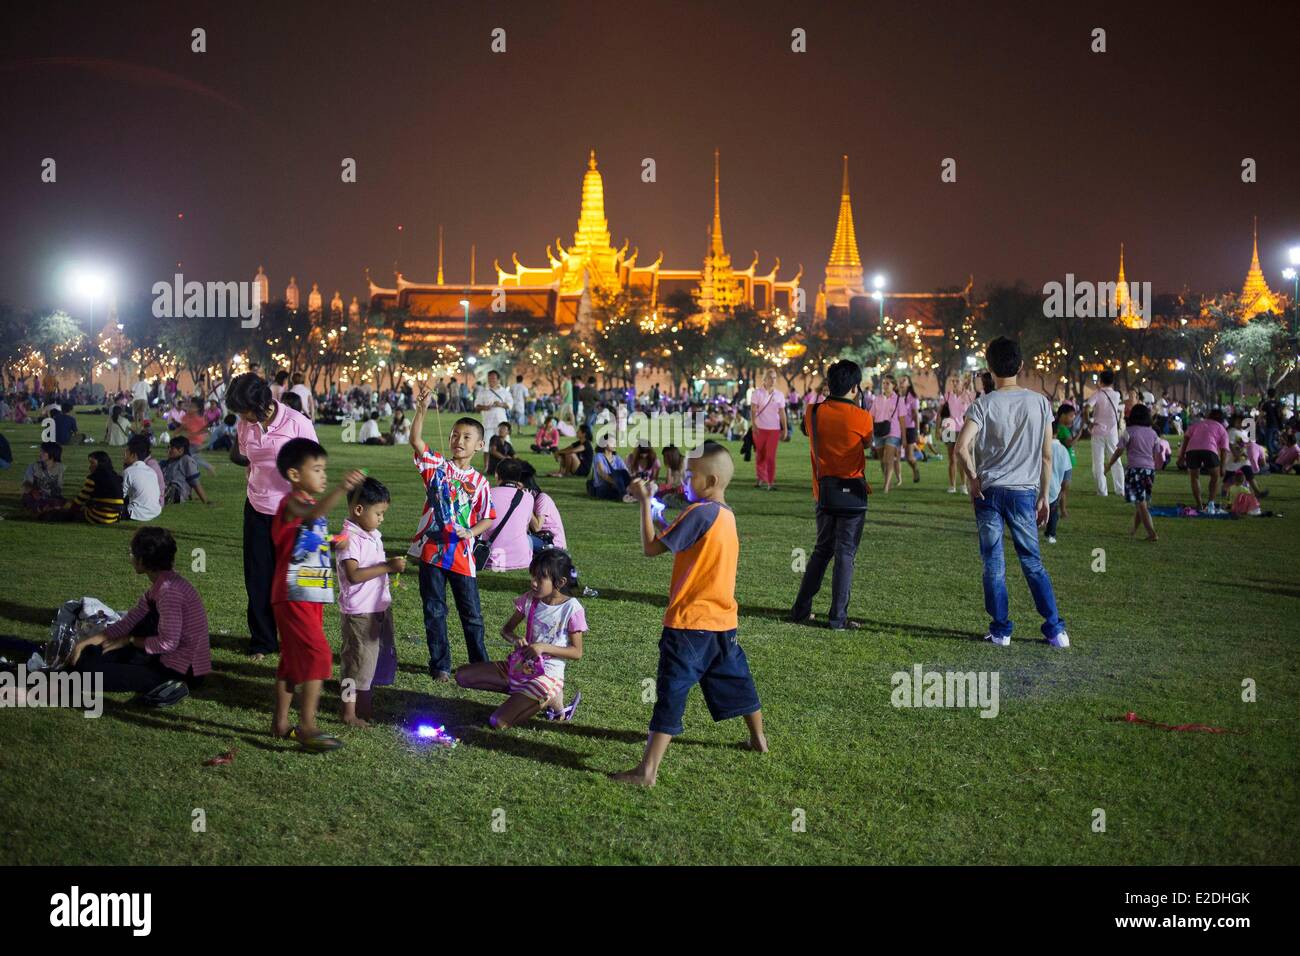 Thailand Bangkok Wat Phra Kaew Grand Palace Sanam Luang Park King's birthday (05/12/2011) illuminations Stock Photo